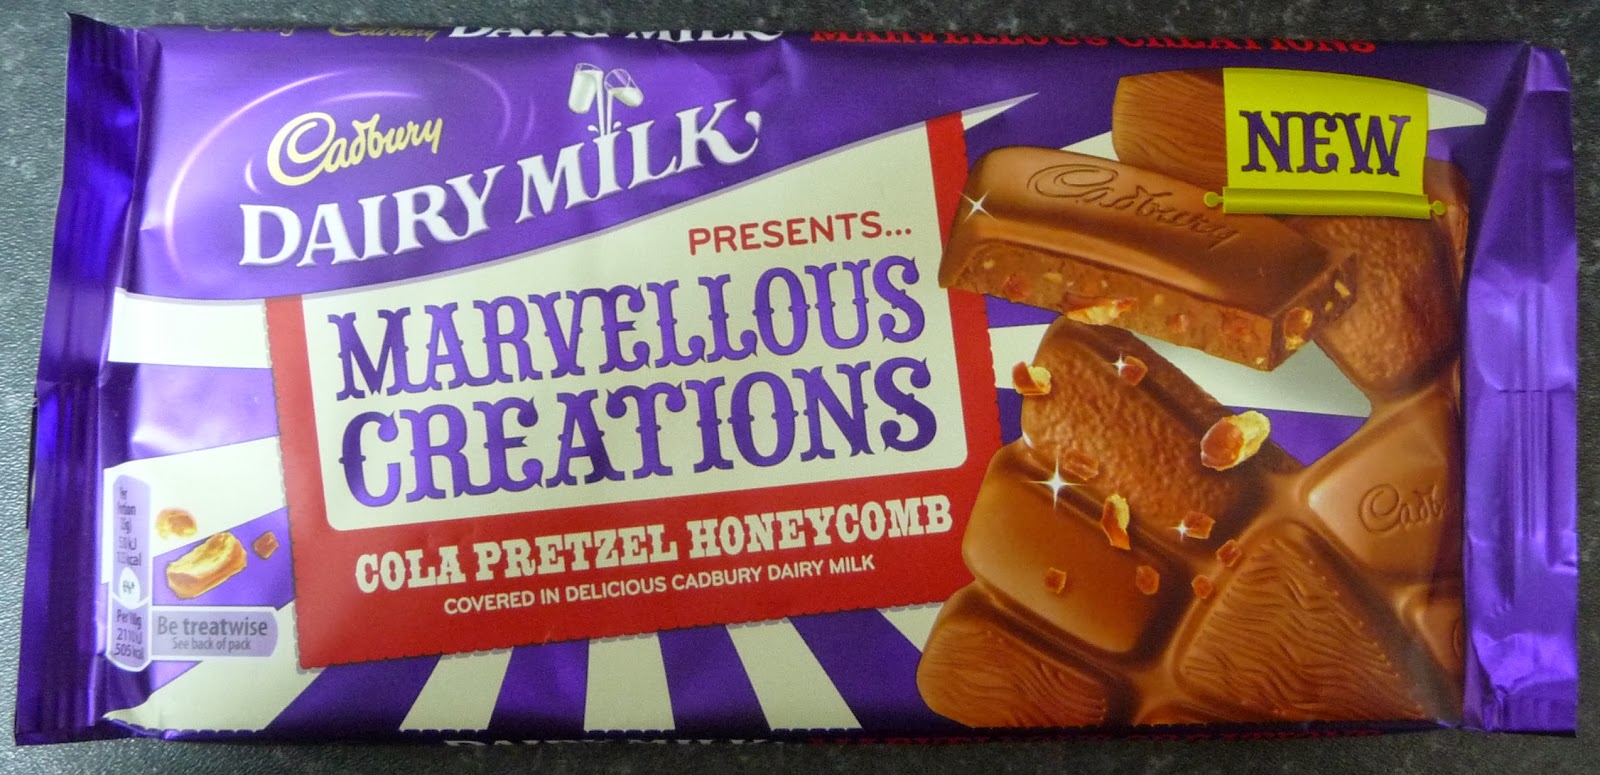 Something to look forward to: Cadbury Dairy Milk: Marvellous creations  (cola pretzel honeycomb)